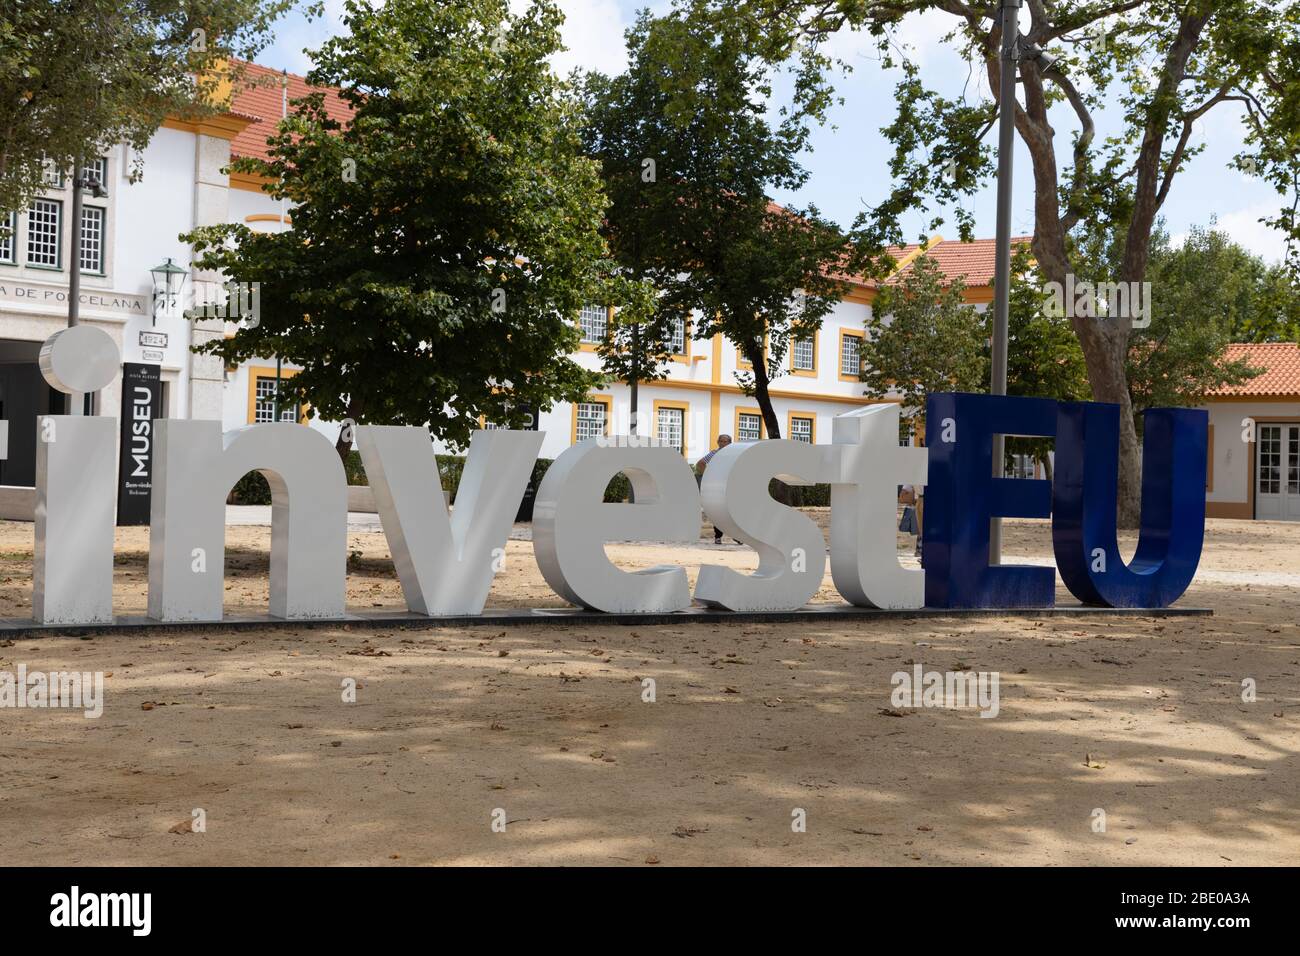 Großes Schild Invest EU vor dem Eingang des Vista Alegre Museums in Ilhavo, Portugal Stockfoto